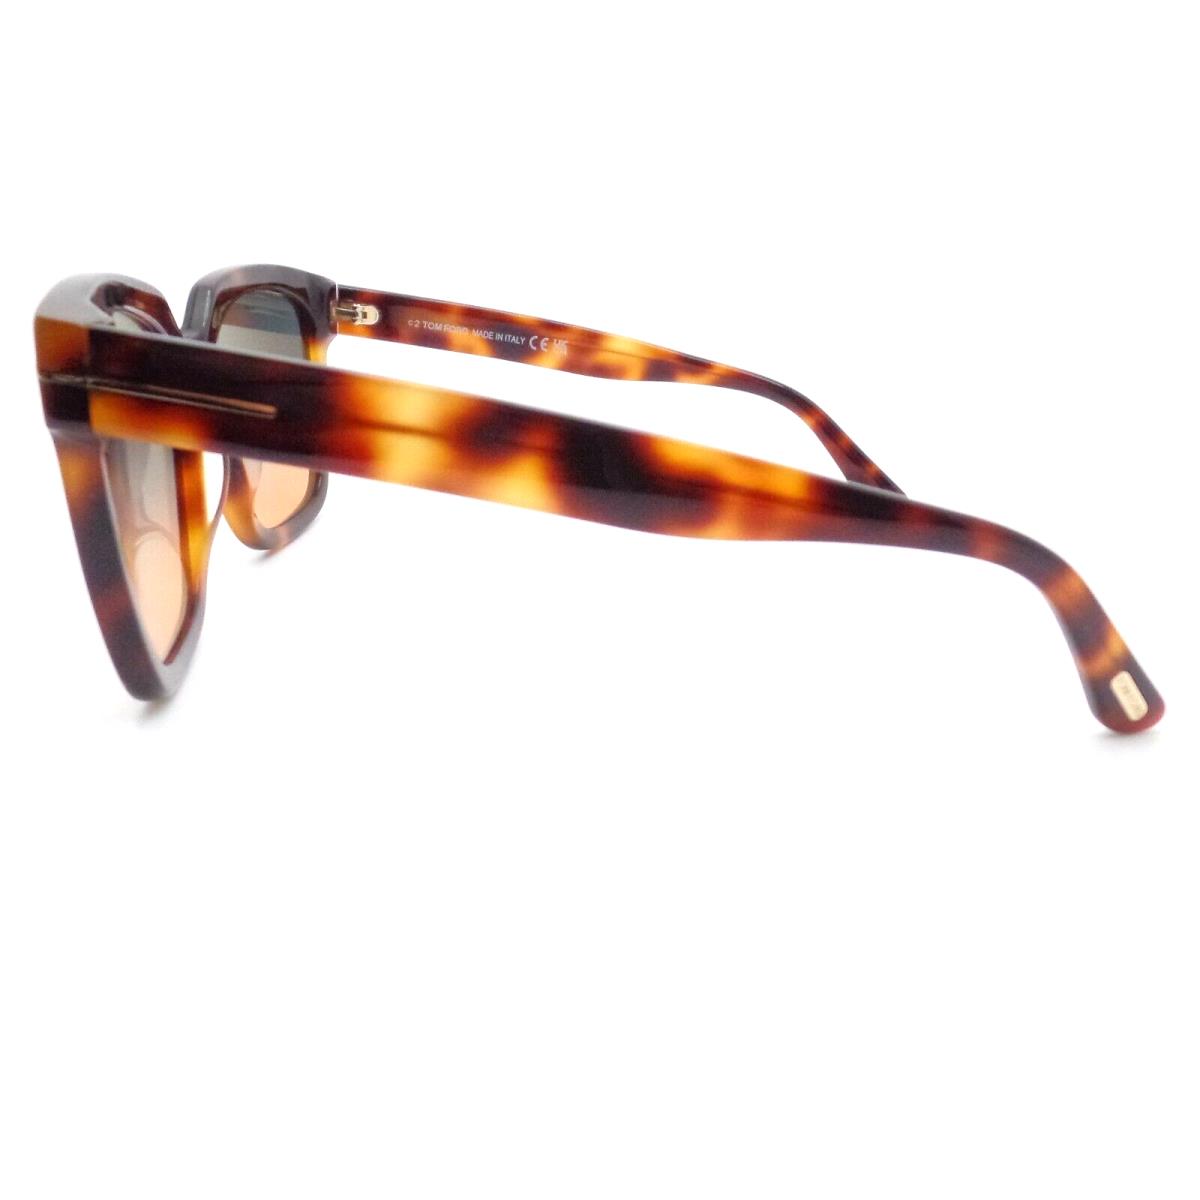 Tom Ford sunglasses Selby - Havana Frame, Blue Teal Peach Fade Lens 1